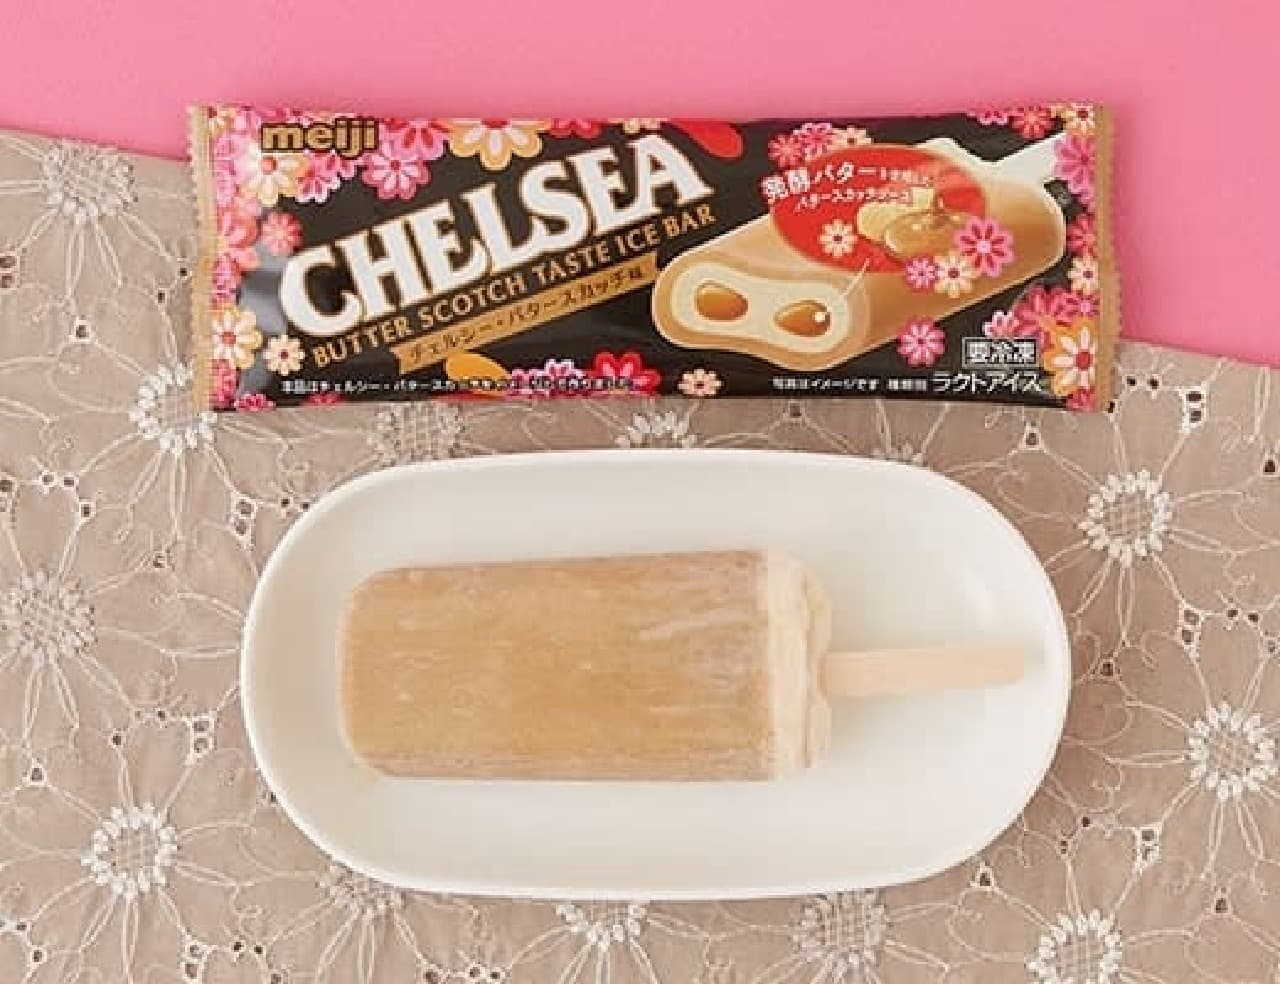 LAWSON "Meiji Chelsea Ice Cream Bar Butterscotch Flavor 85ml